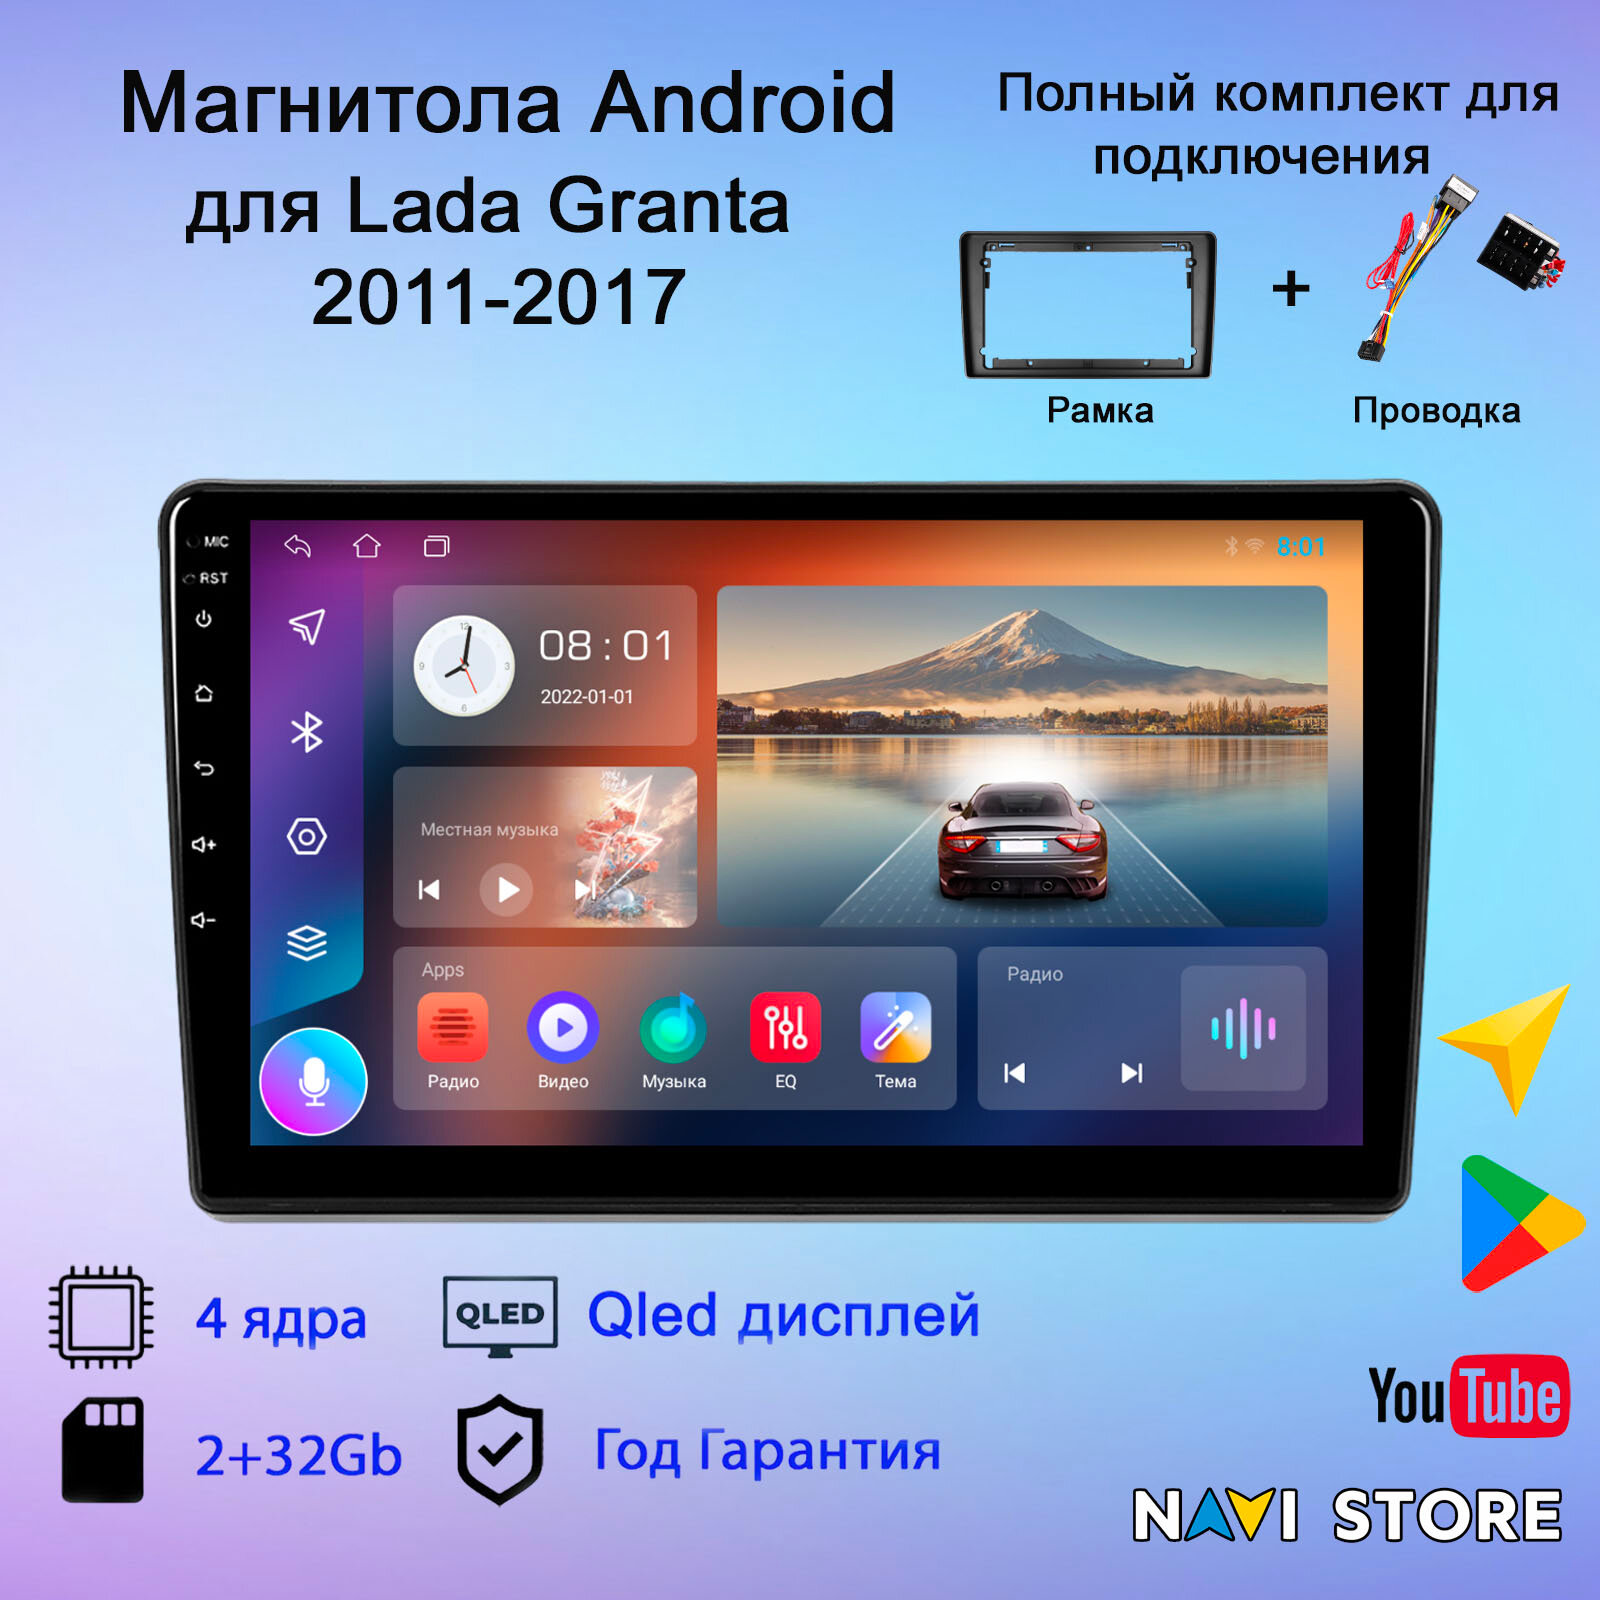 Магнитола Андроид для Lada Granta 2011-2017 2+32Gb (Android/Wi-FI/Bluetooh/2DIN/Штатная магнитола/Головное устройство